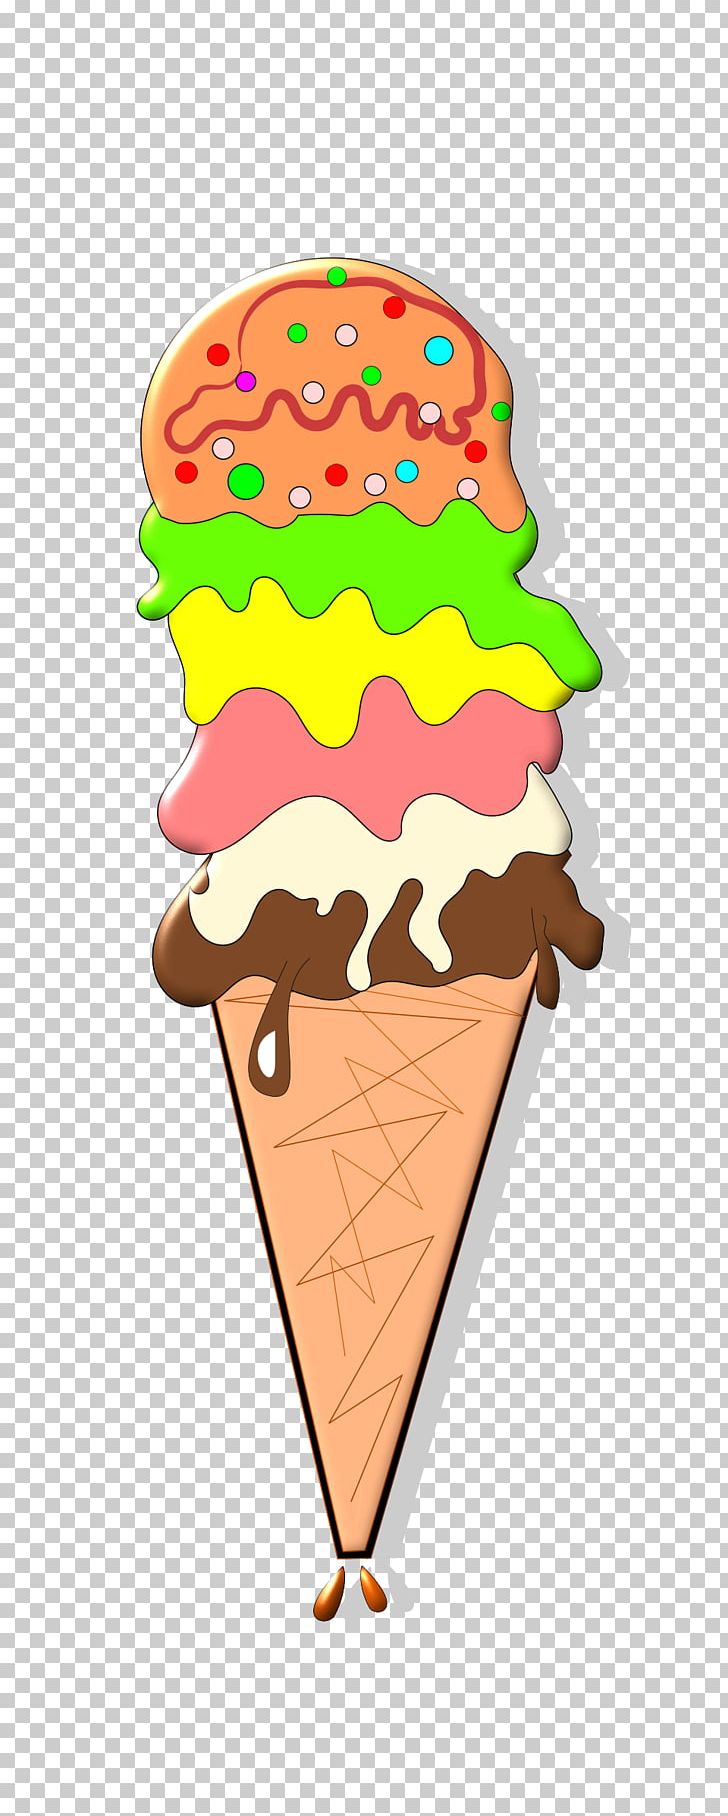 Ice Cream Cones Chocolate Ice Cream Strawberry Ice Cream PNG, Clipart, Bonbones, Chocolate, Chocolate Ice Cream, Cone, Cream Free PNG Download